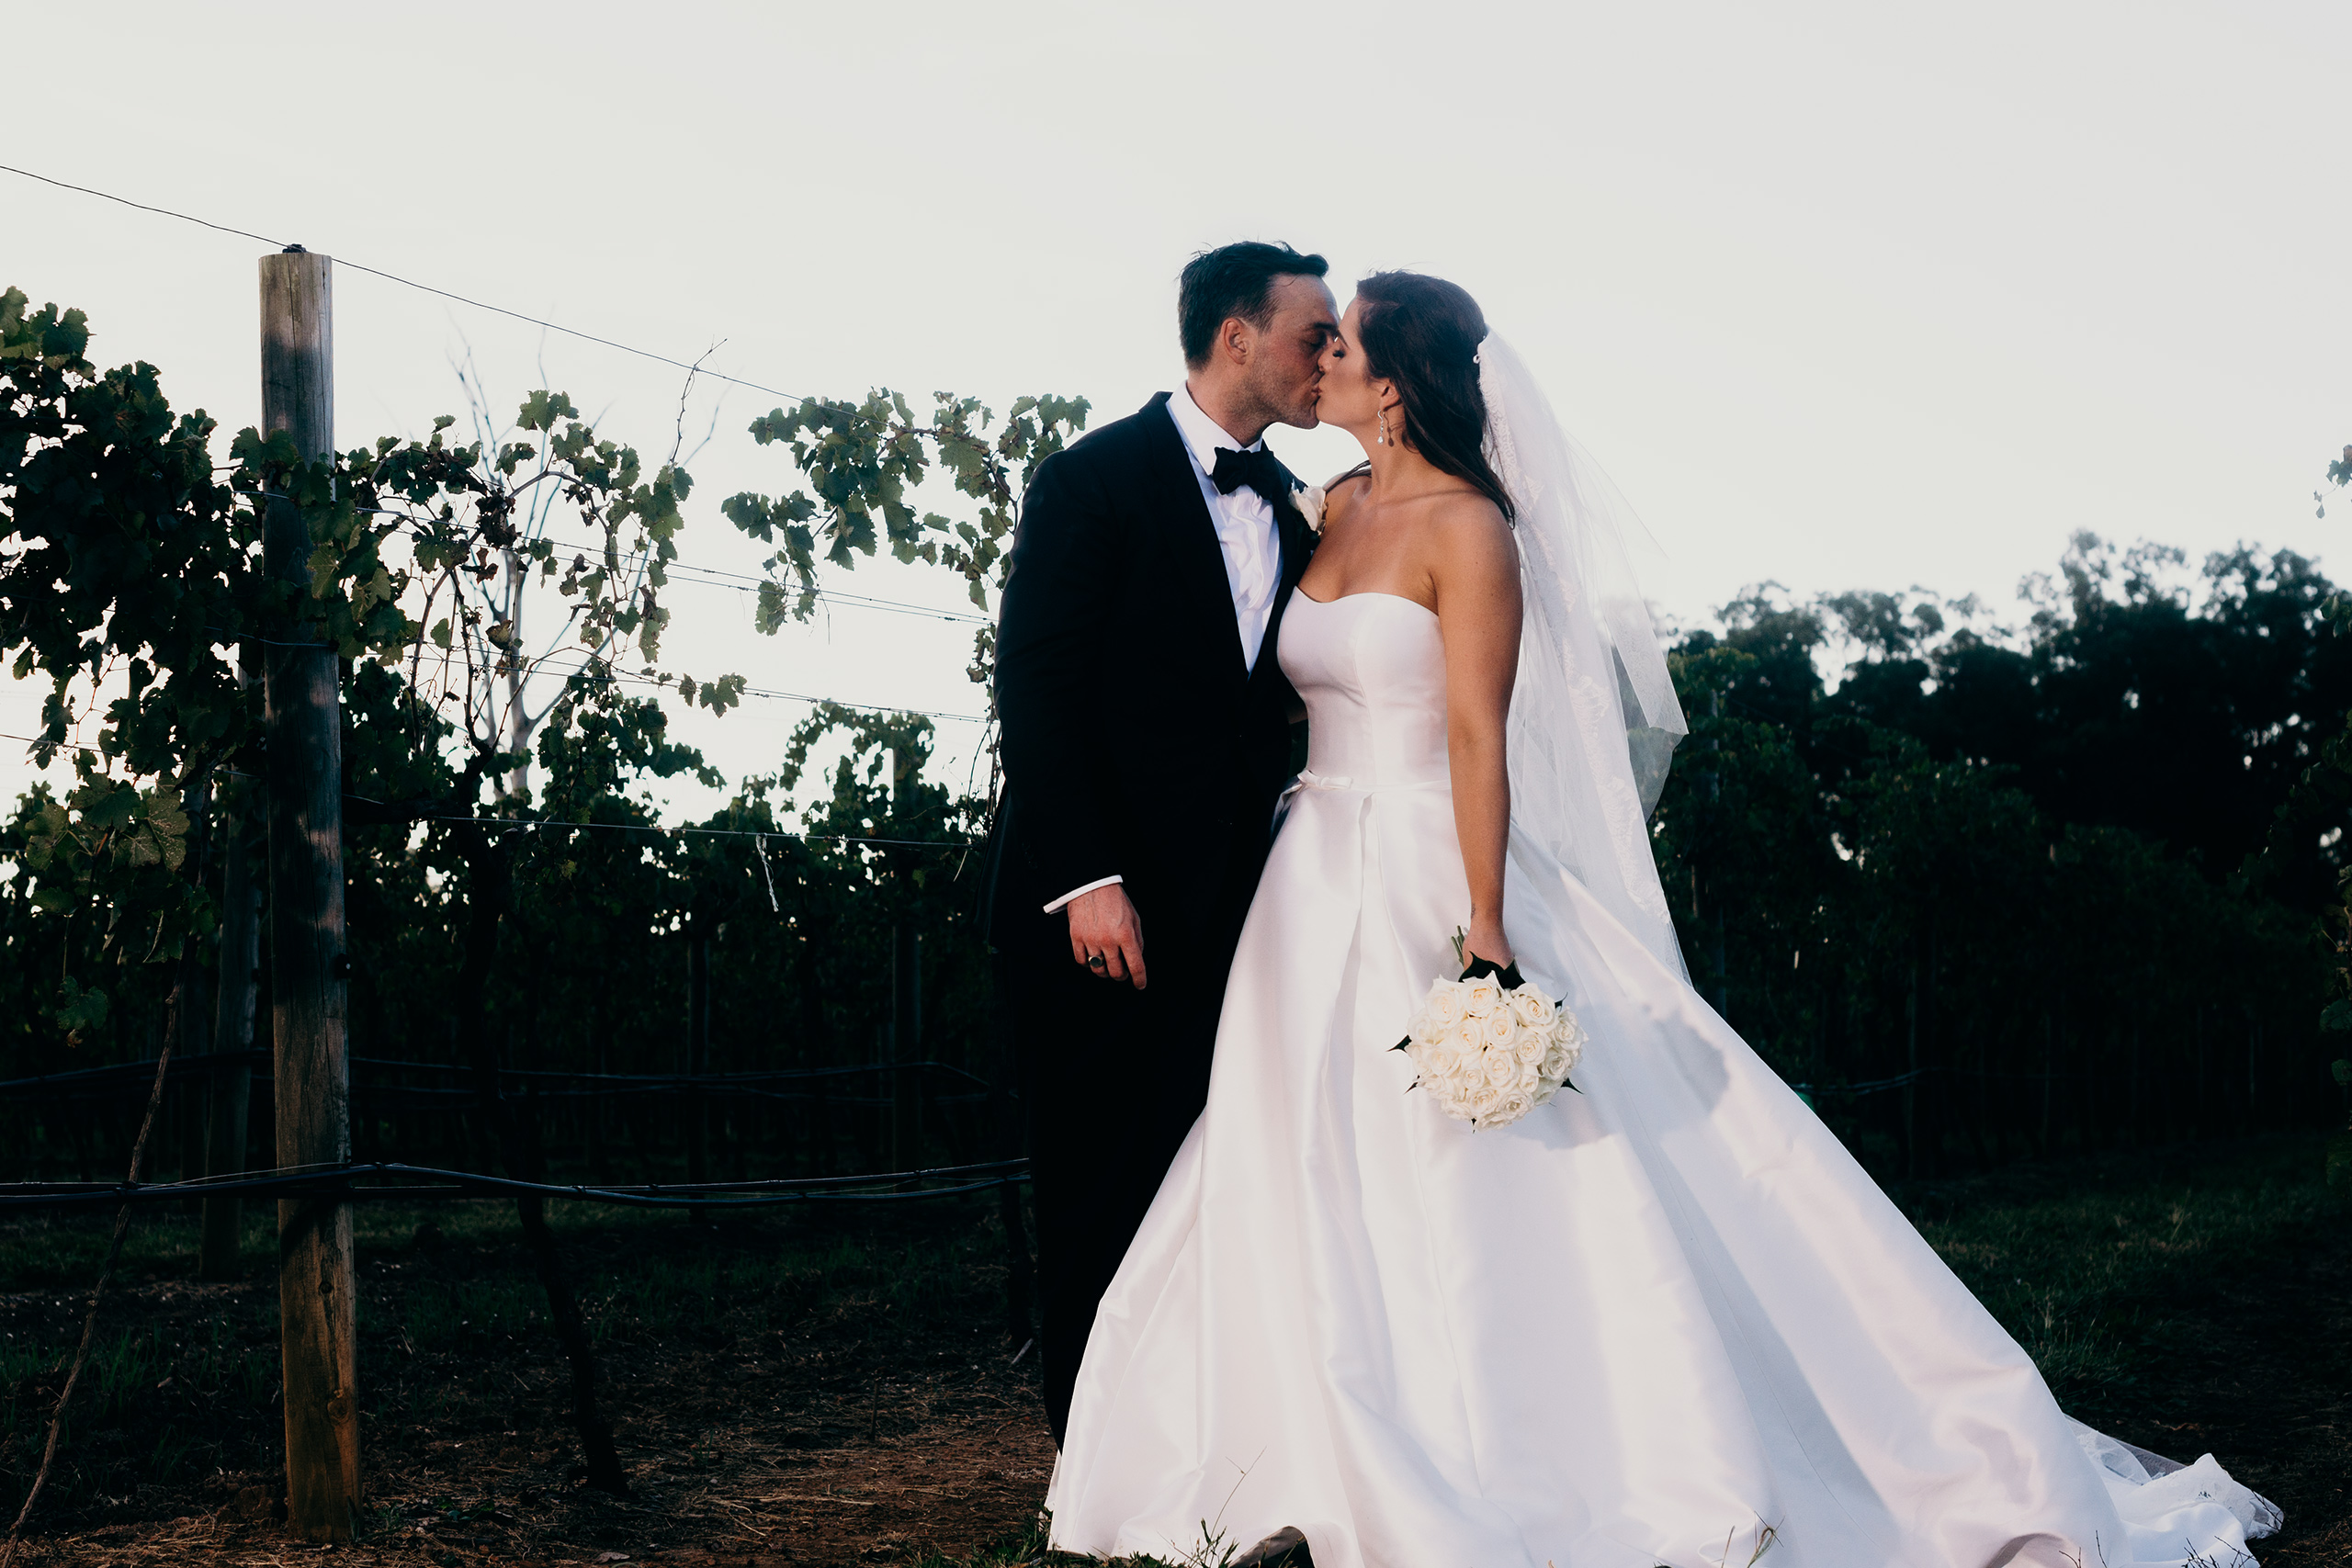 Bride and groom kissing in the vineyard image